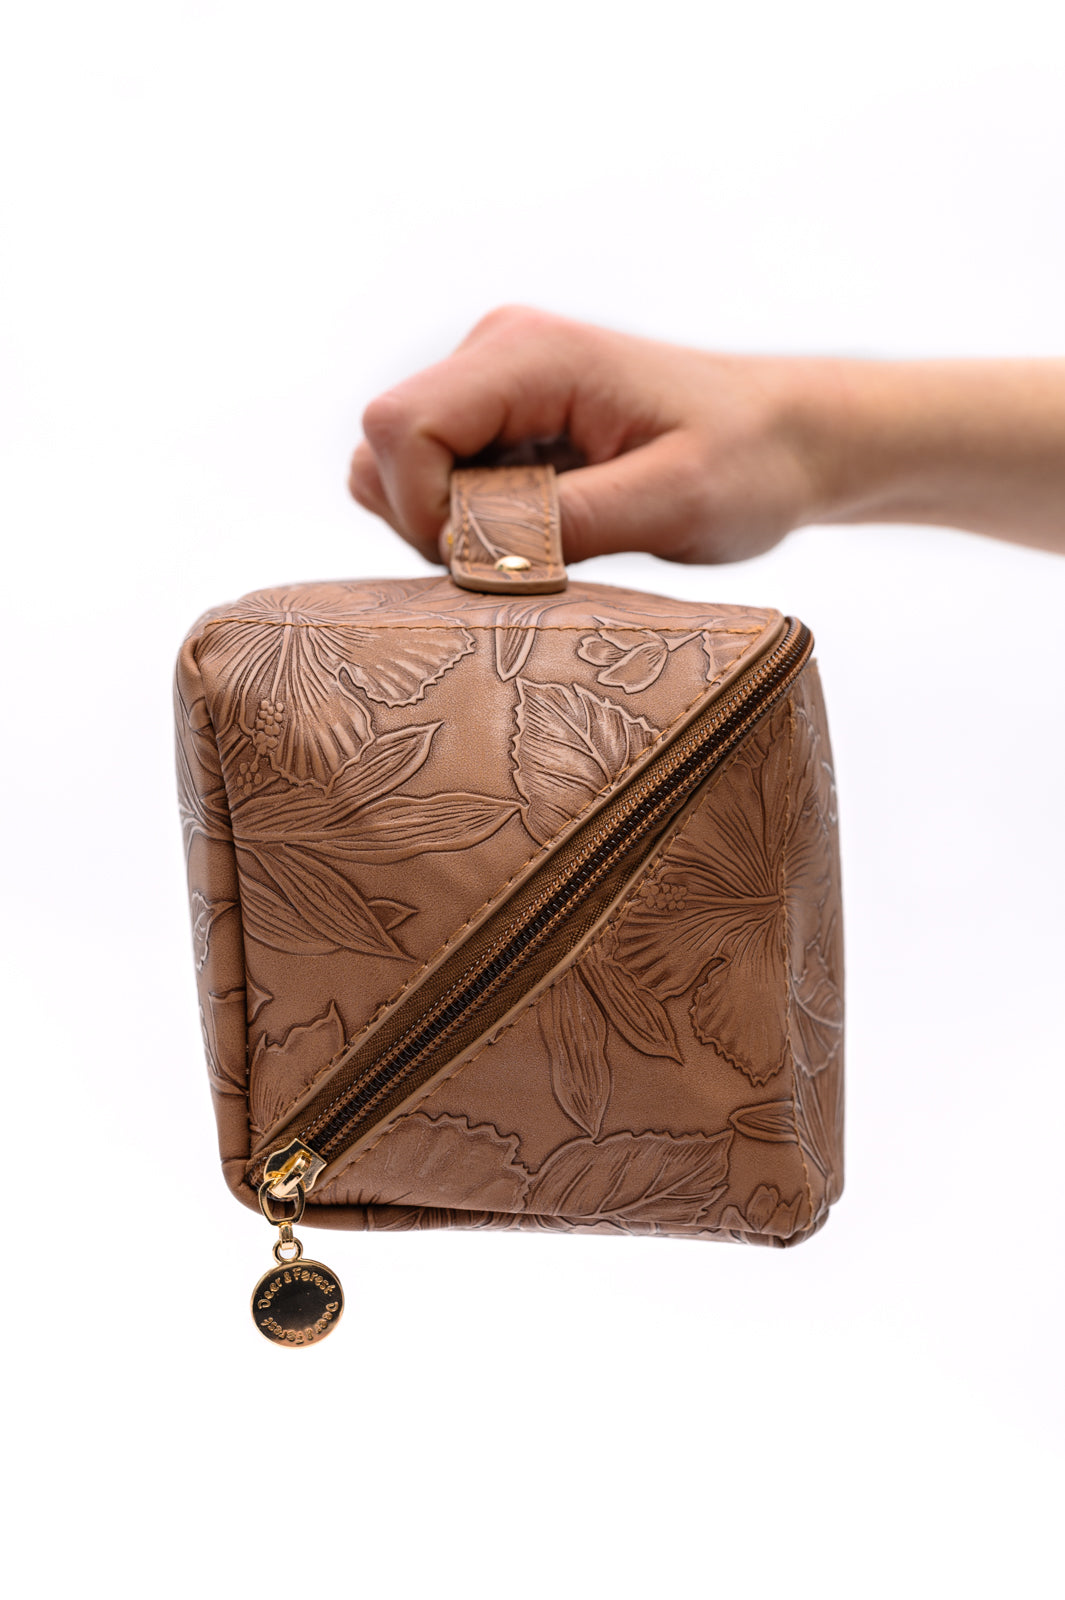 ONLINE EXCLUSIVE Life In Luxury Large Capacity Cosmetic Bag in Tan